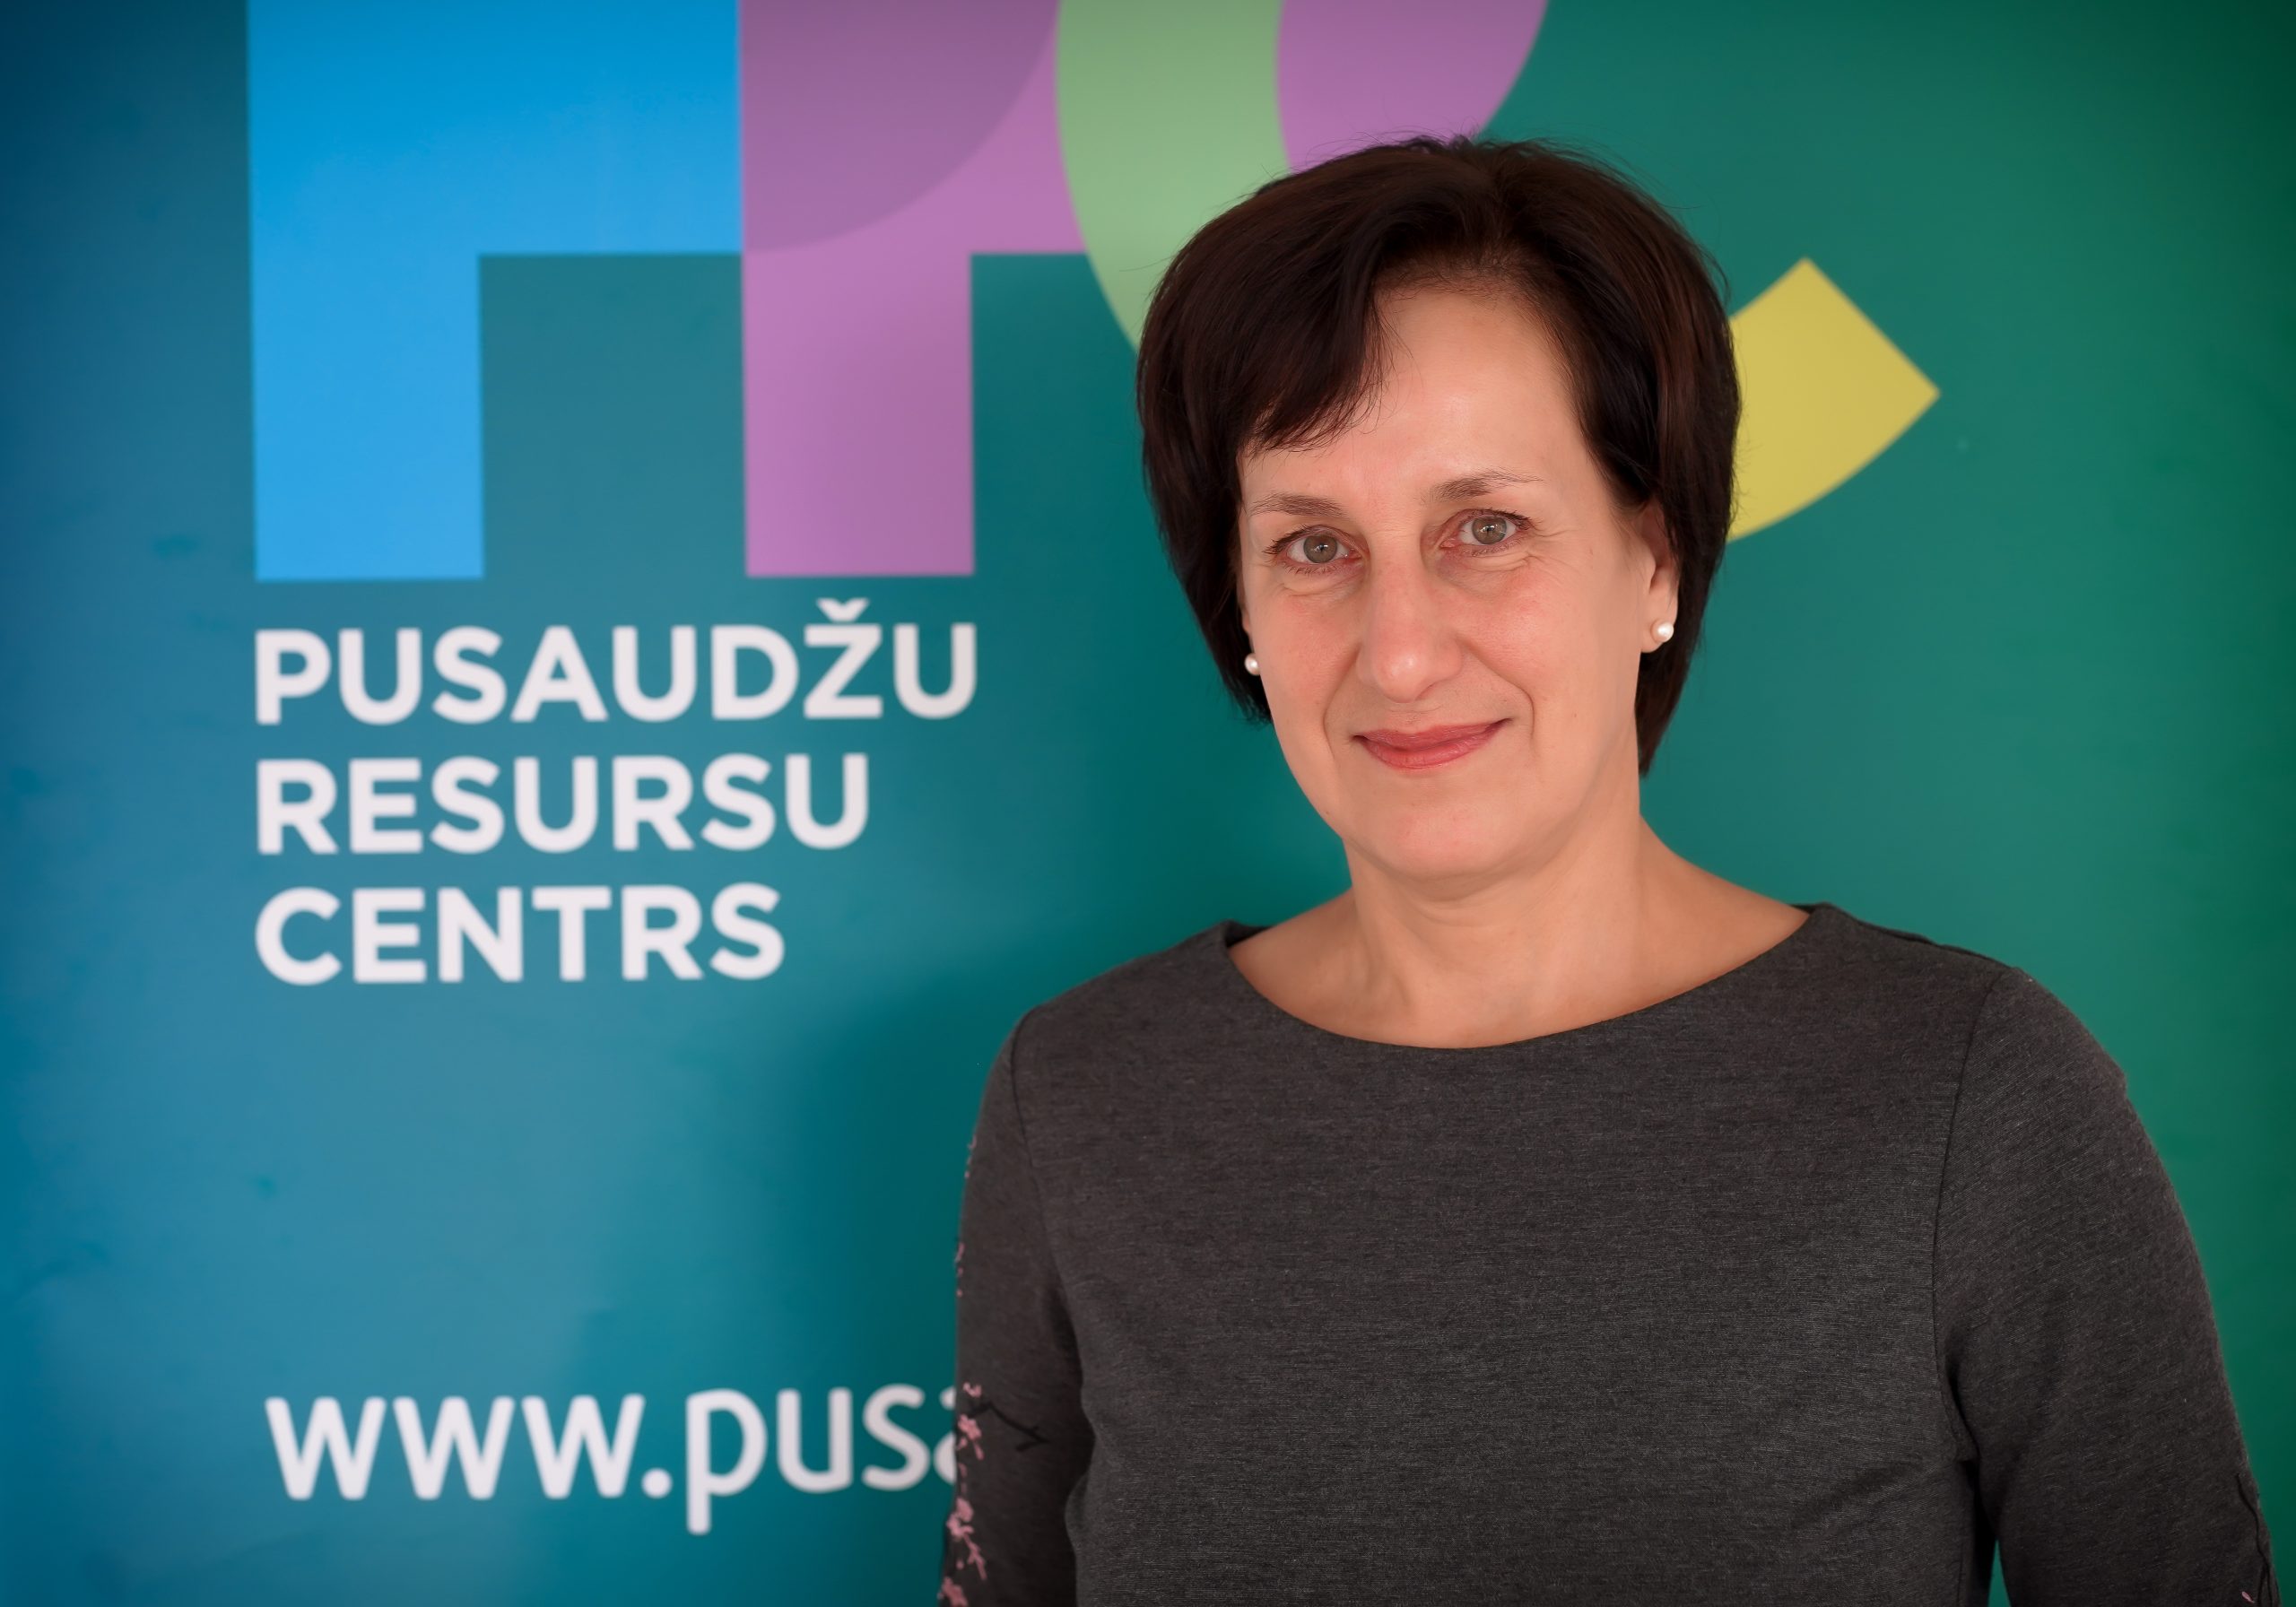 Žanna Dubrovska, PRC psihologs - Pusaudžu resursu centrs